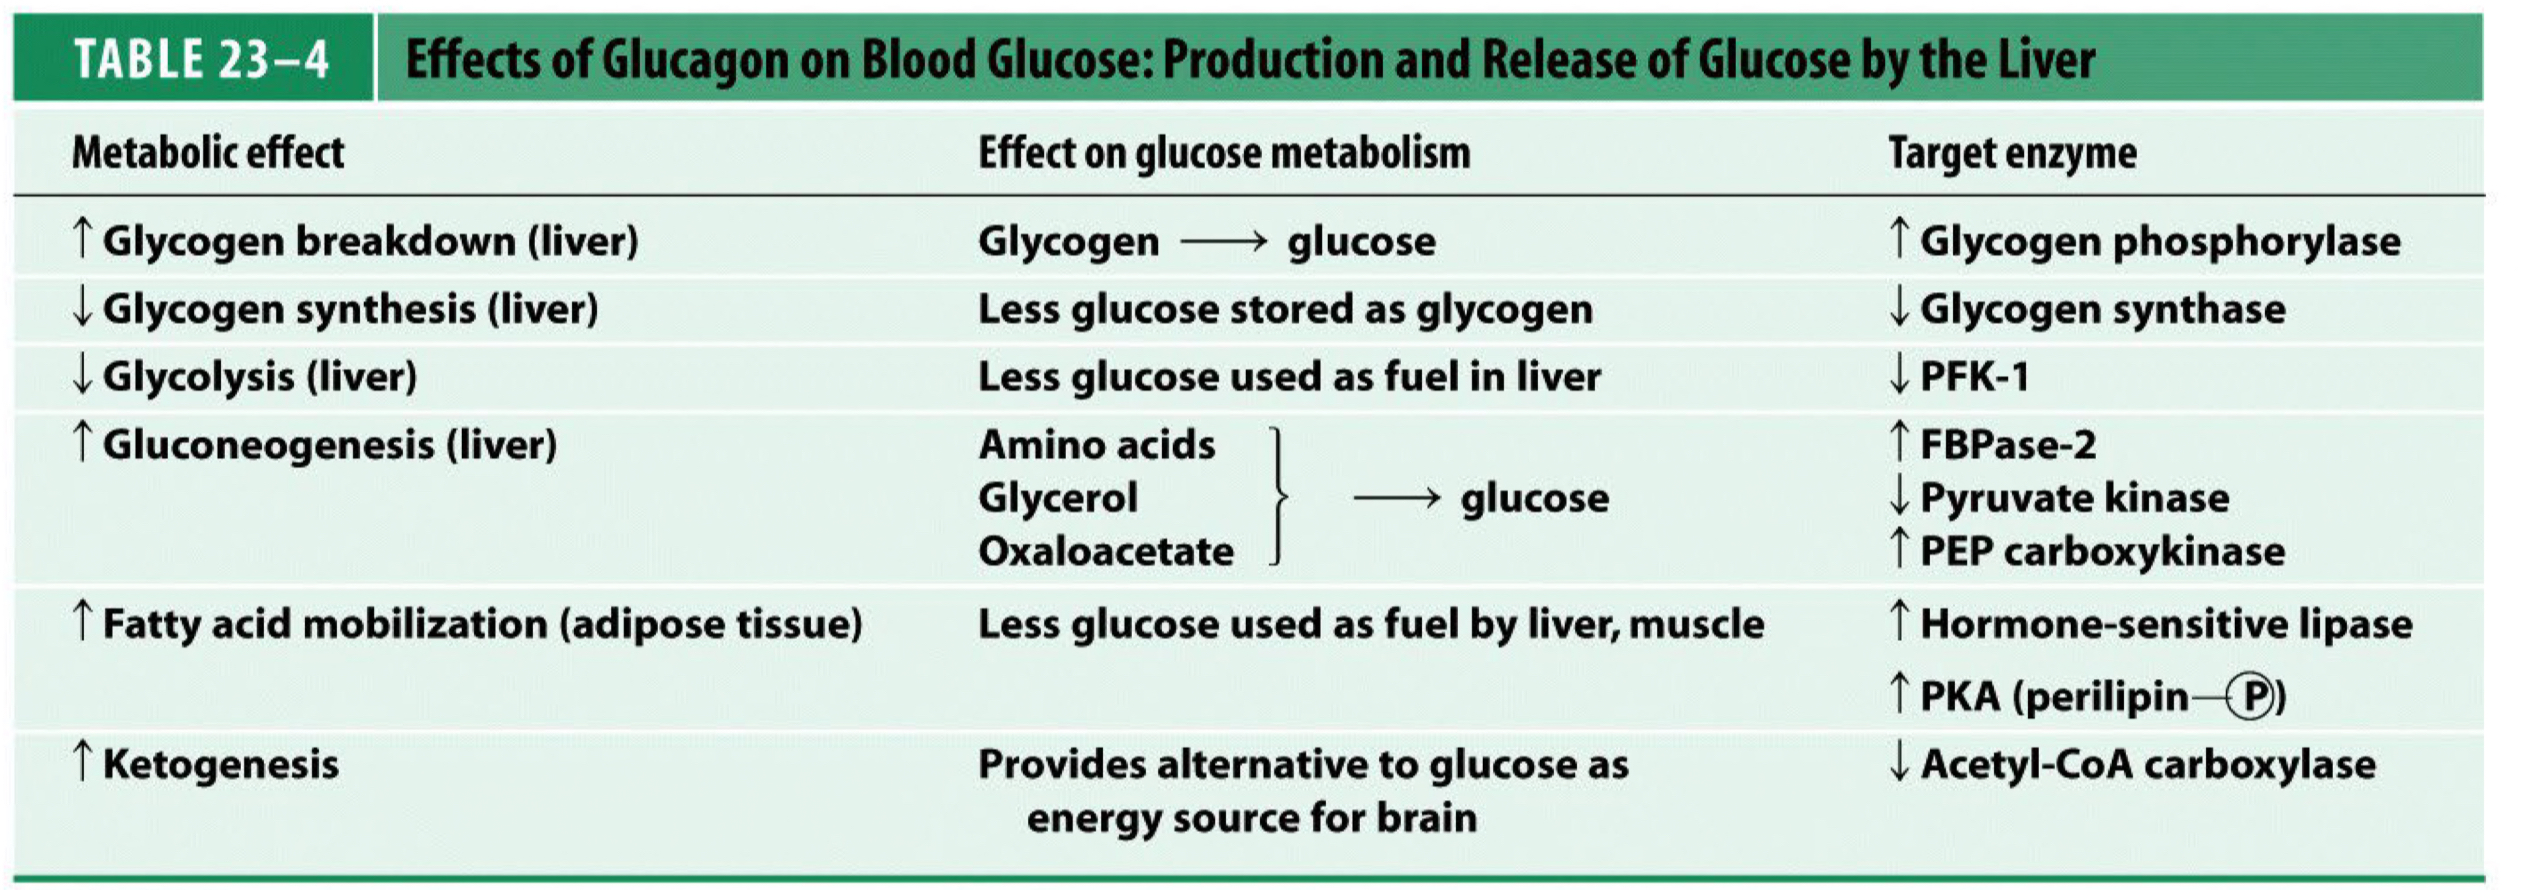 <ul><li><p>Glucagon promotes glycogen breakdown (glycogenolysis) and stimulates gluconeogenesis, which raises blood glucose.</p></li><li><p>Maintains glucose homeostasis during fasting.</p></li></ul>